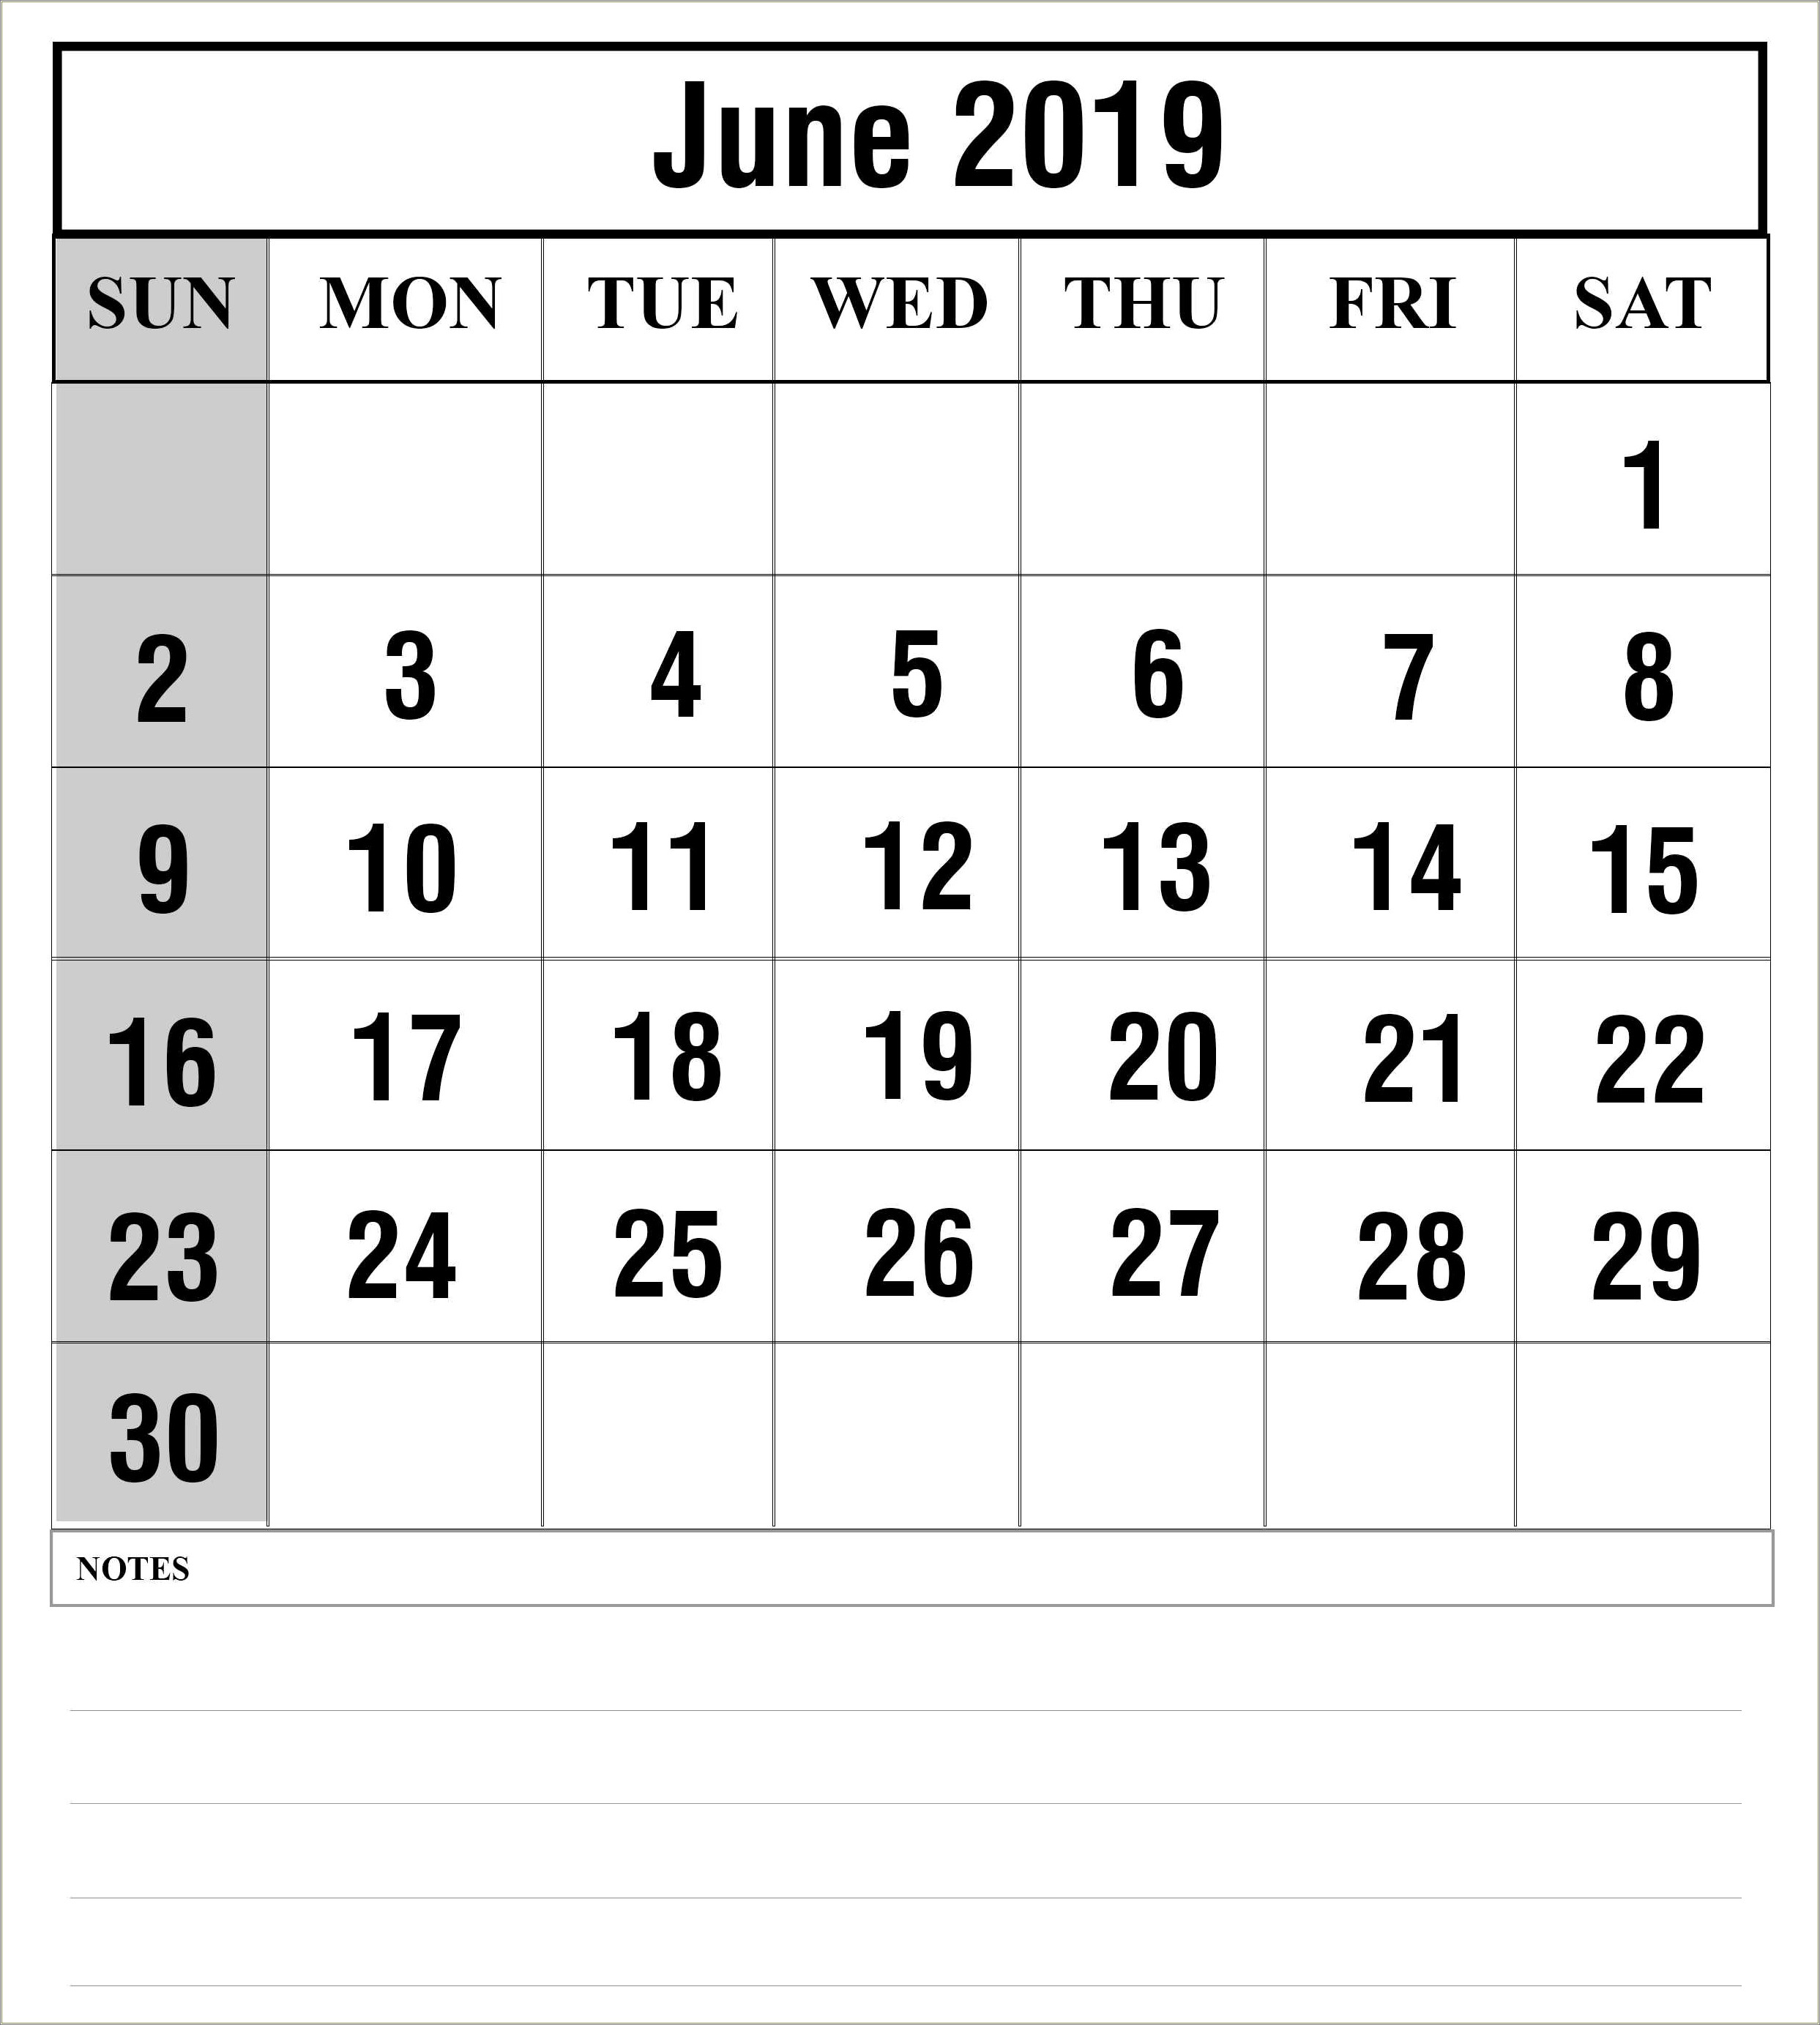 June July Augusty 2019 Free Calendar Template